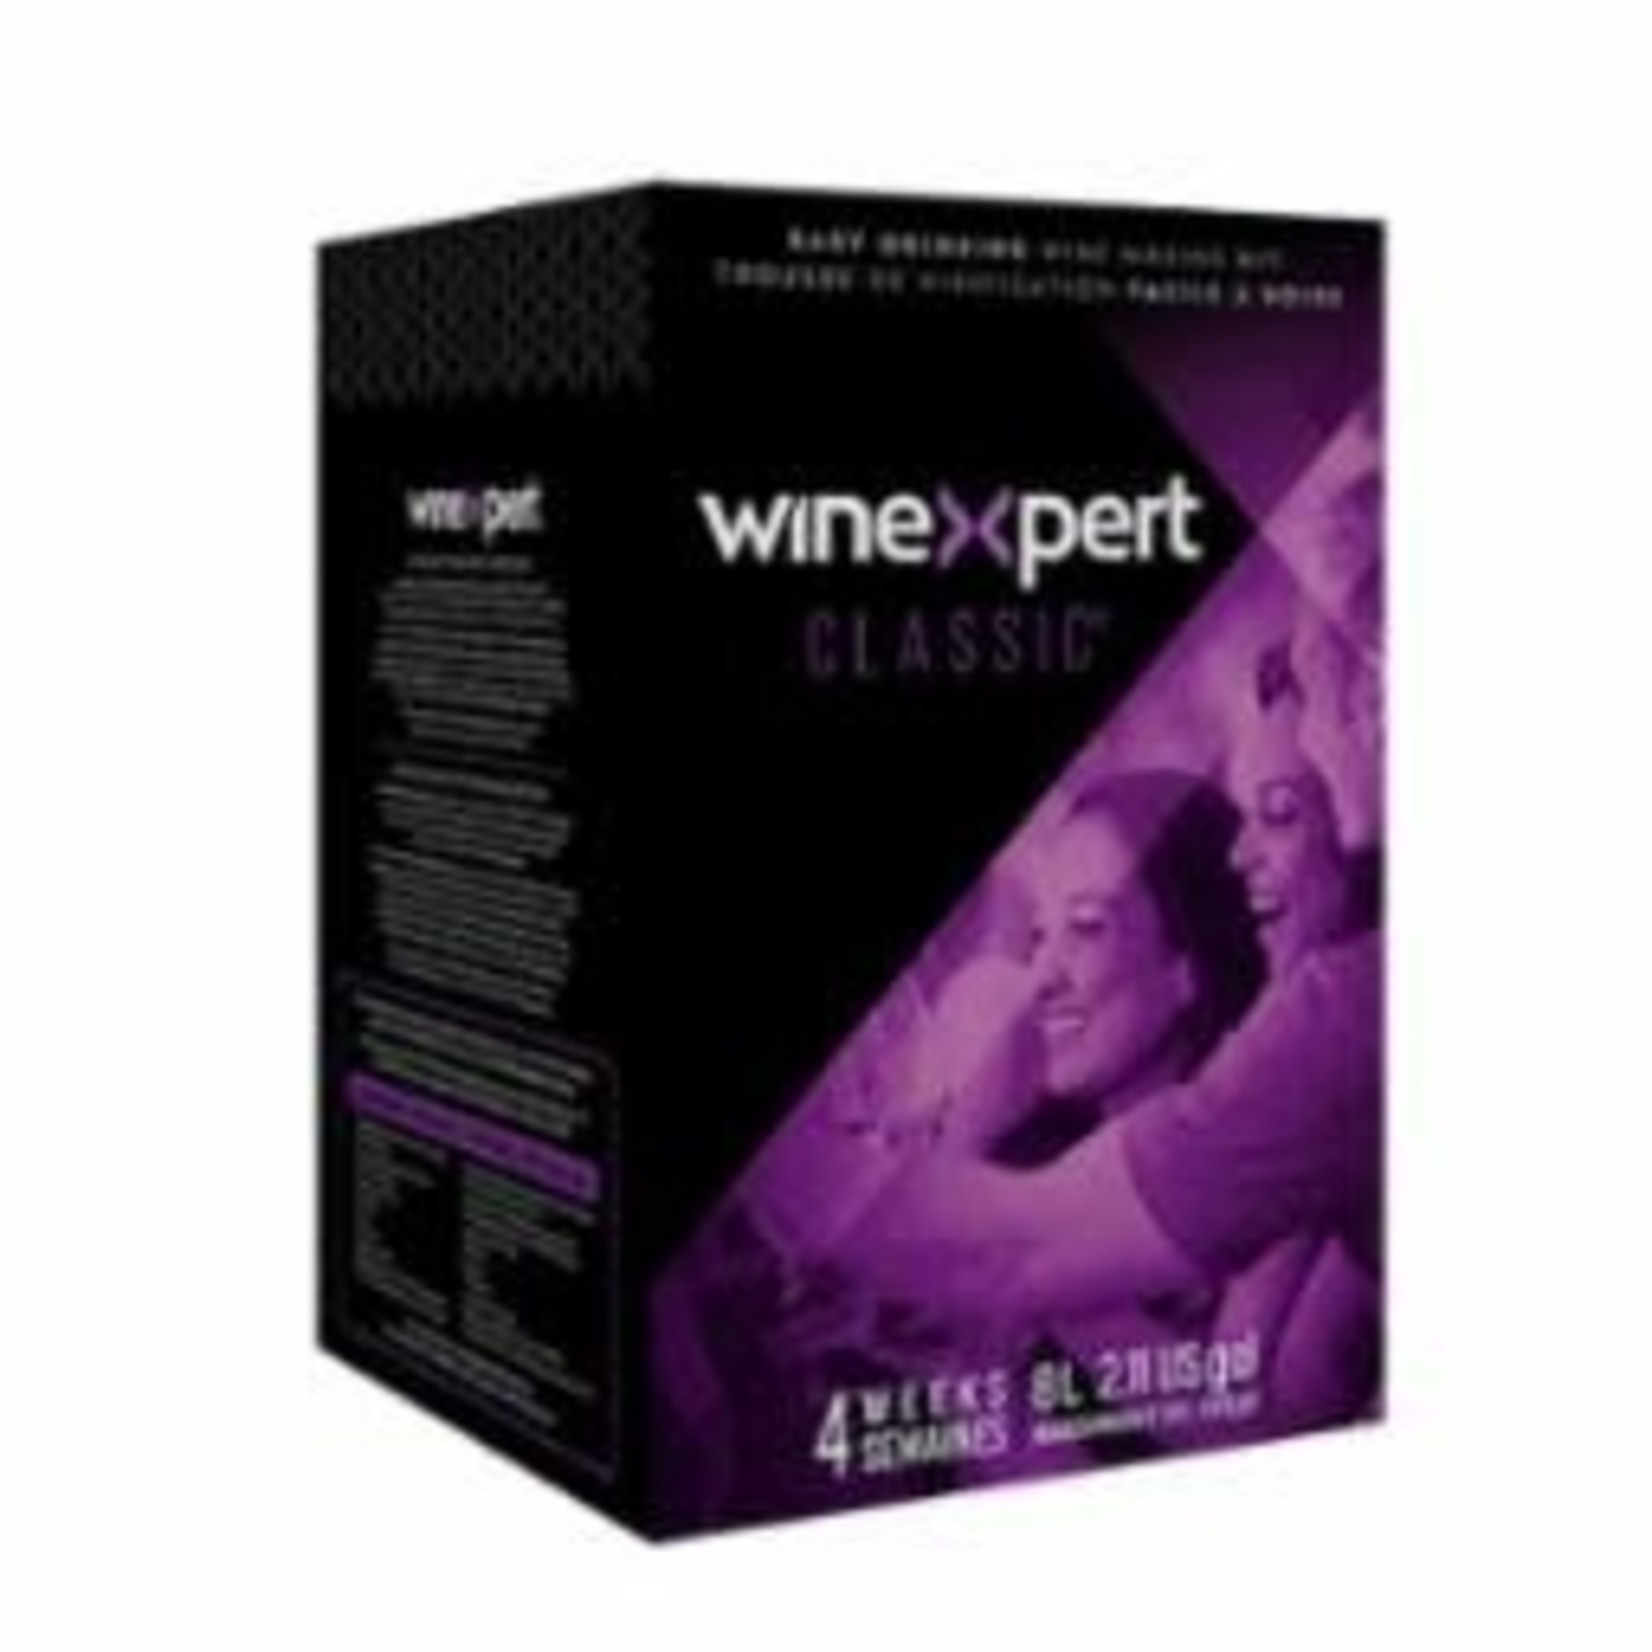 WineXpert Classic California Shiraz 8L